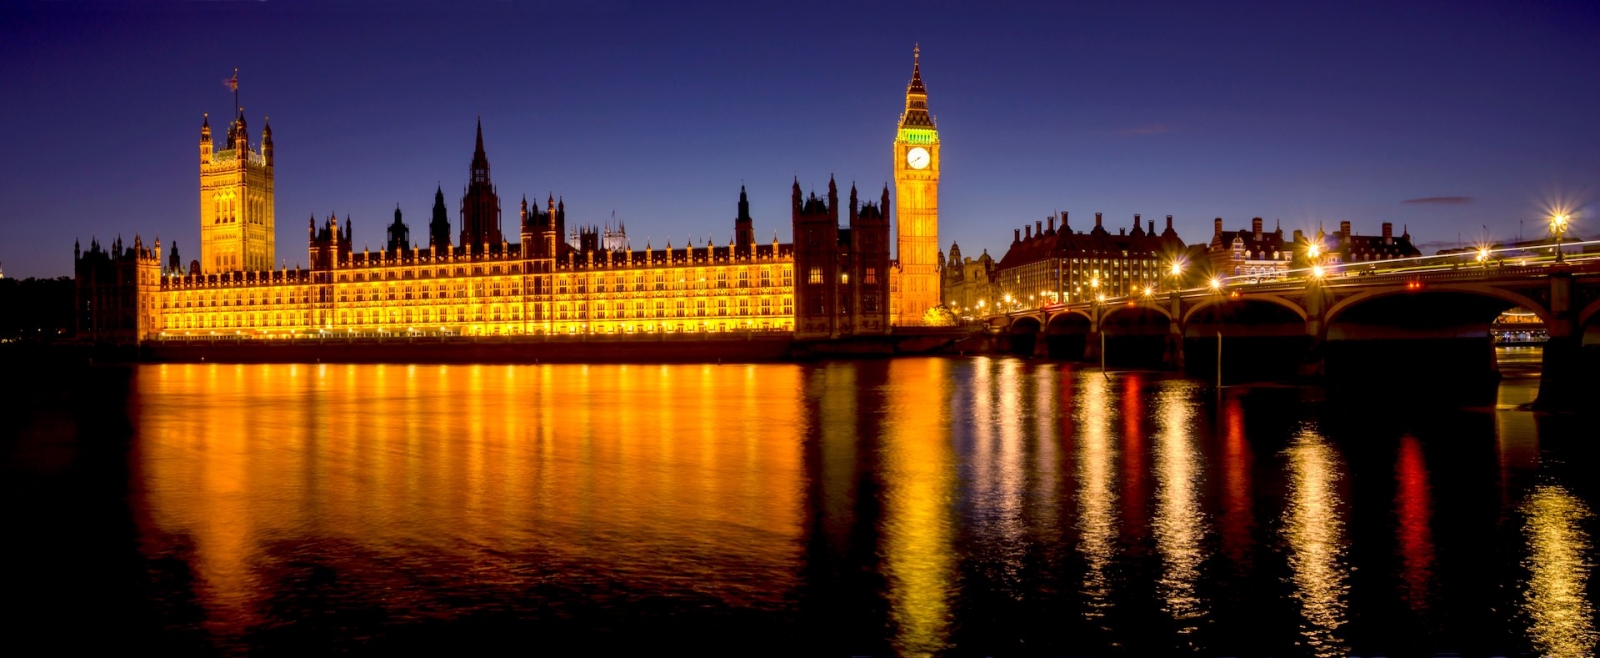 Здания парламента в Лондоне, Великобритания